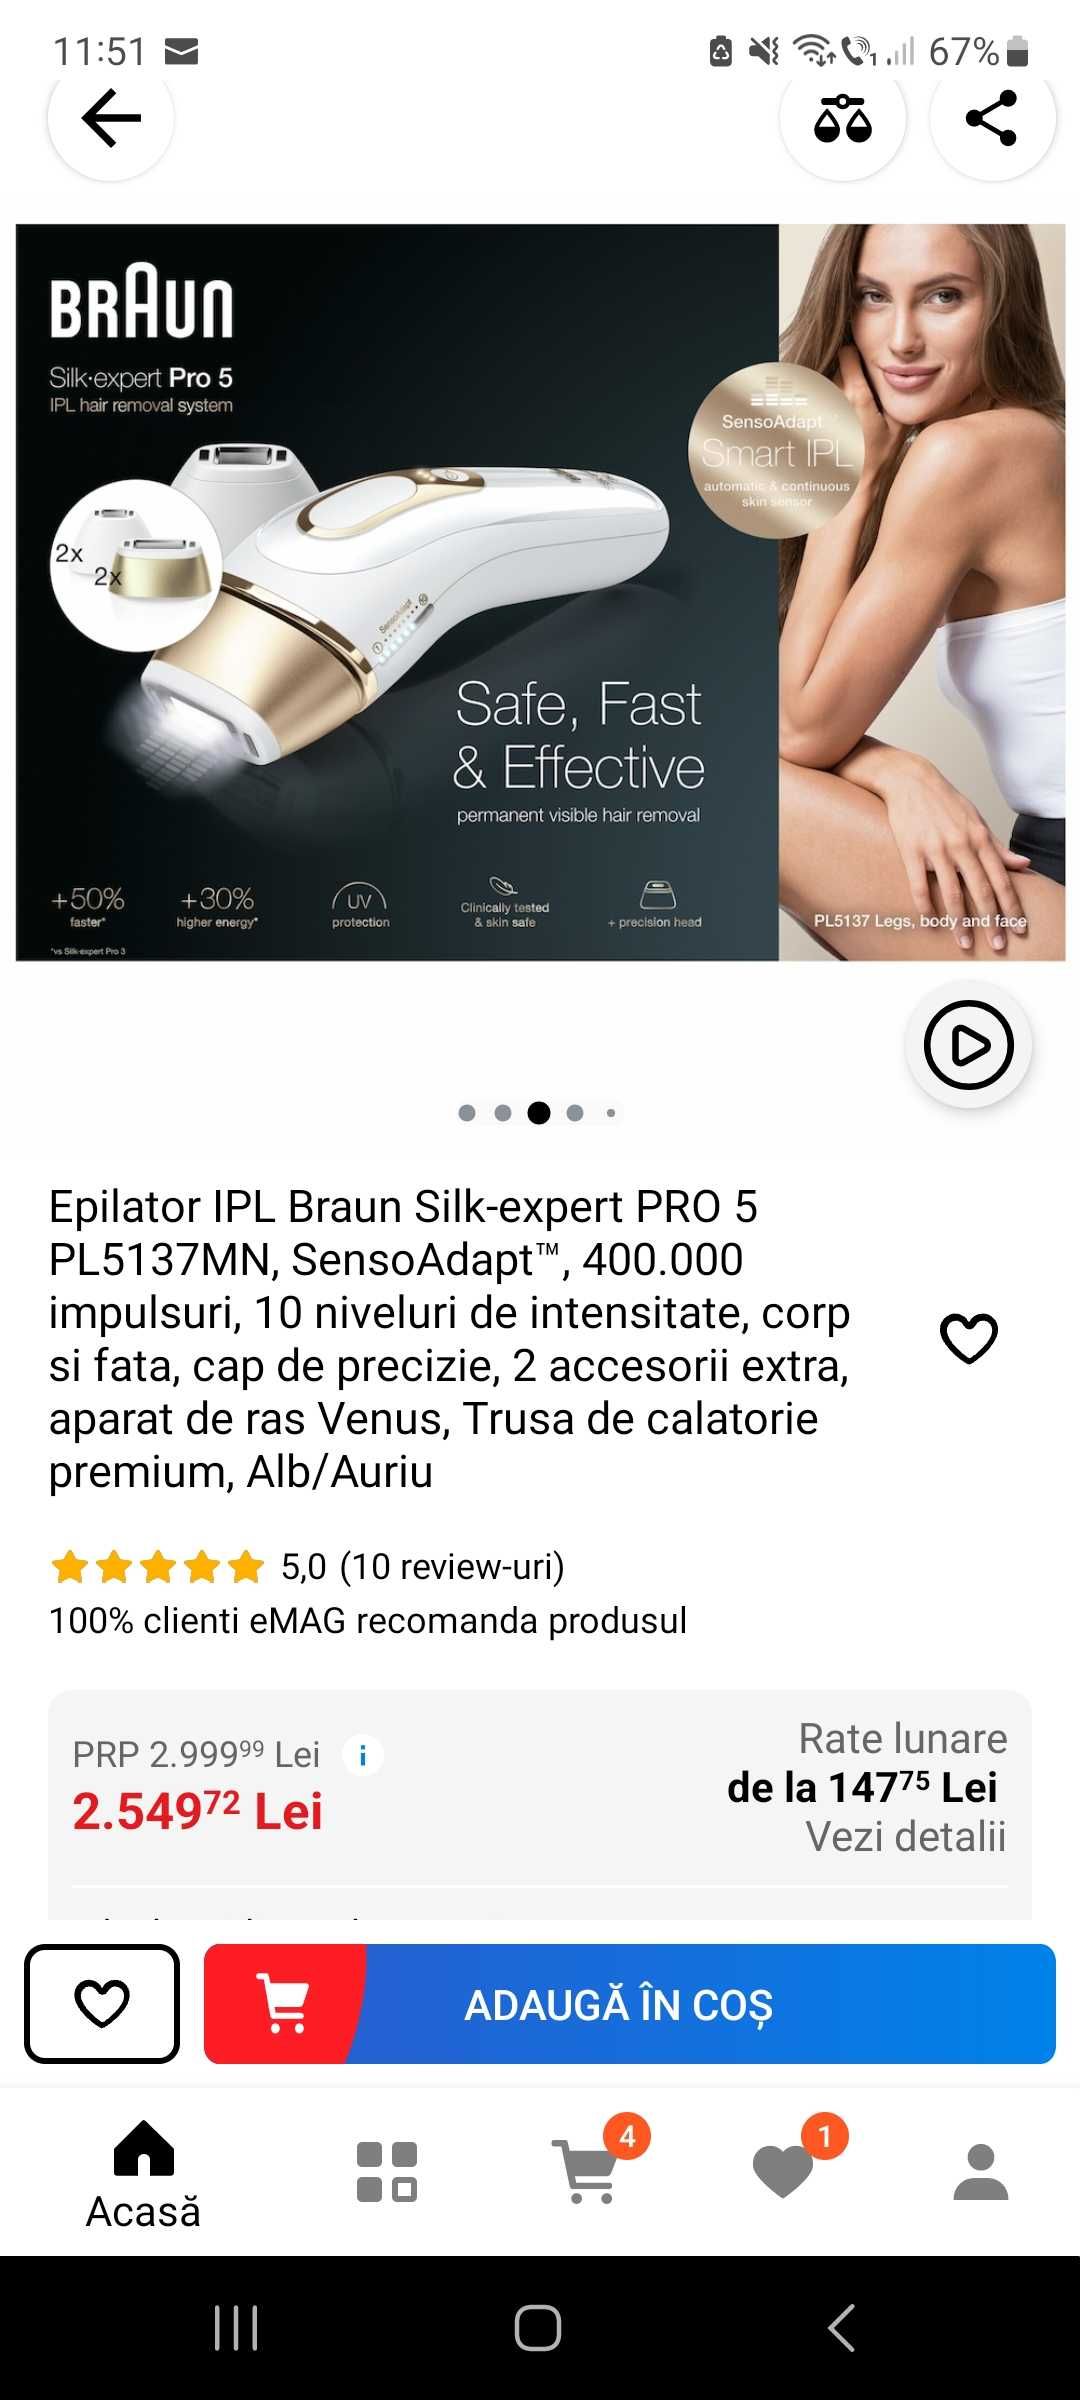 Epilator Braun silk-expert pro 5 PL5137